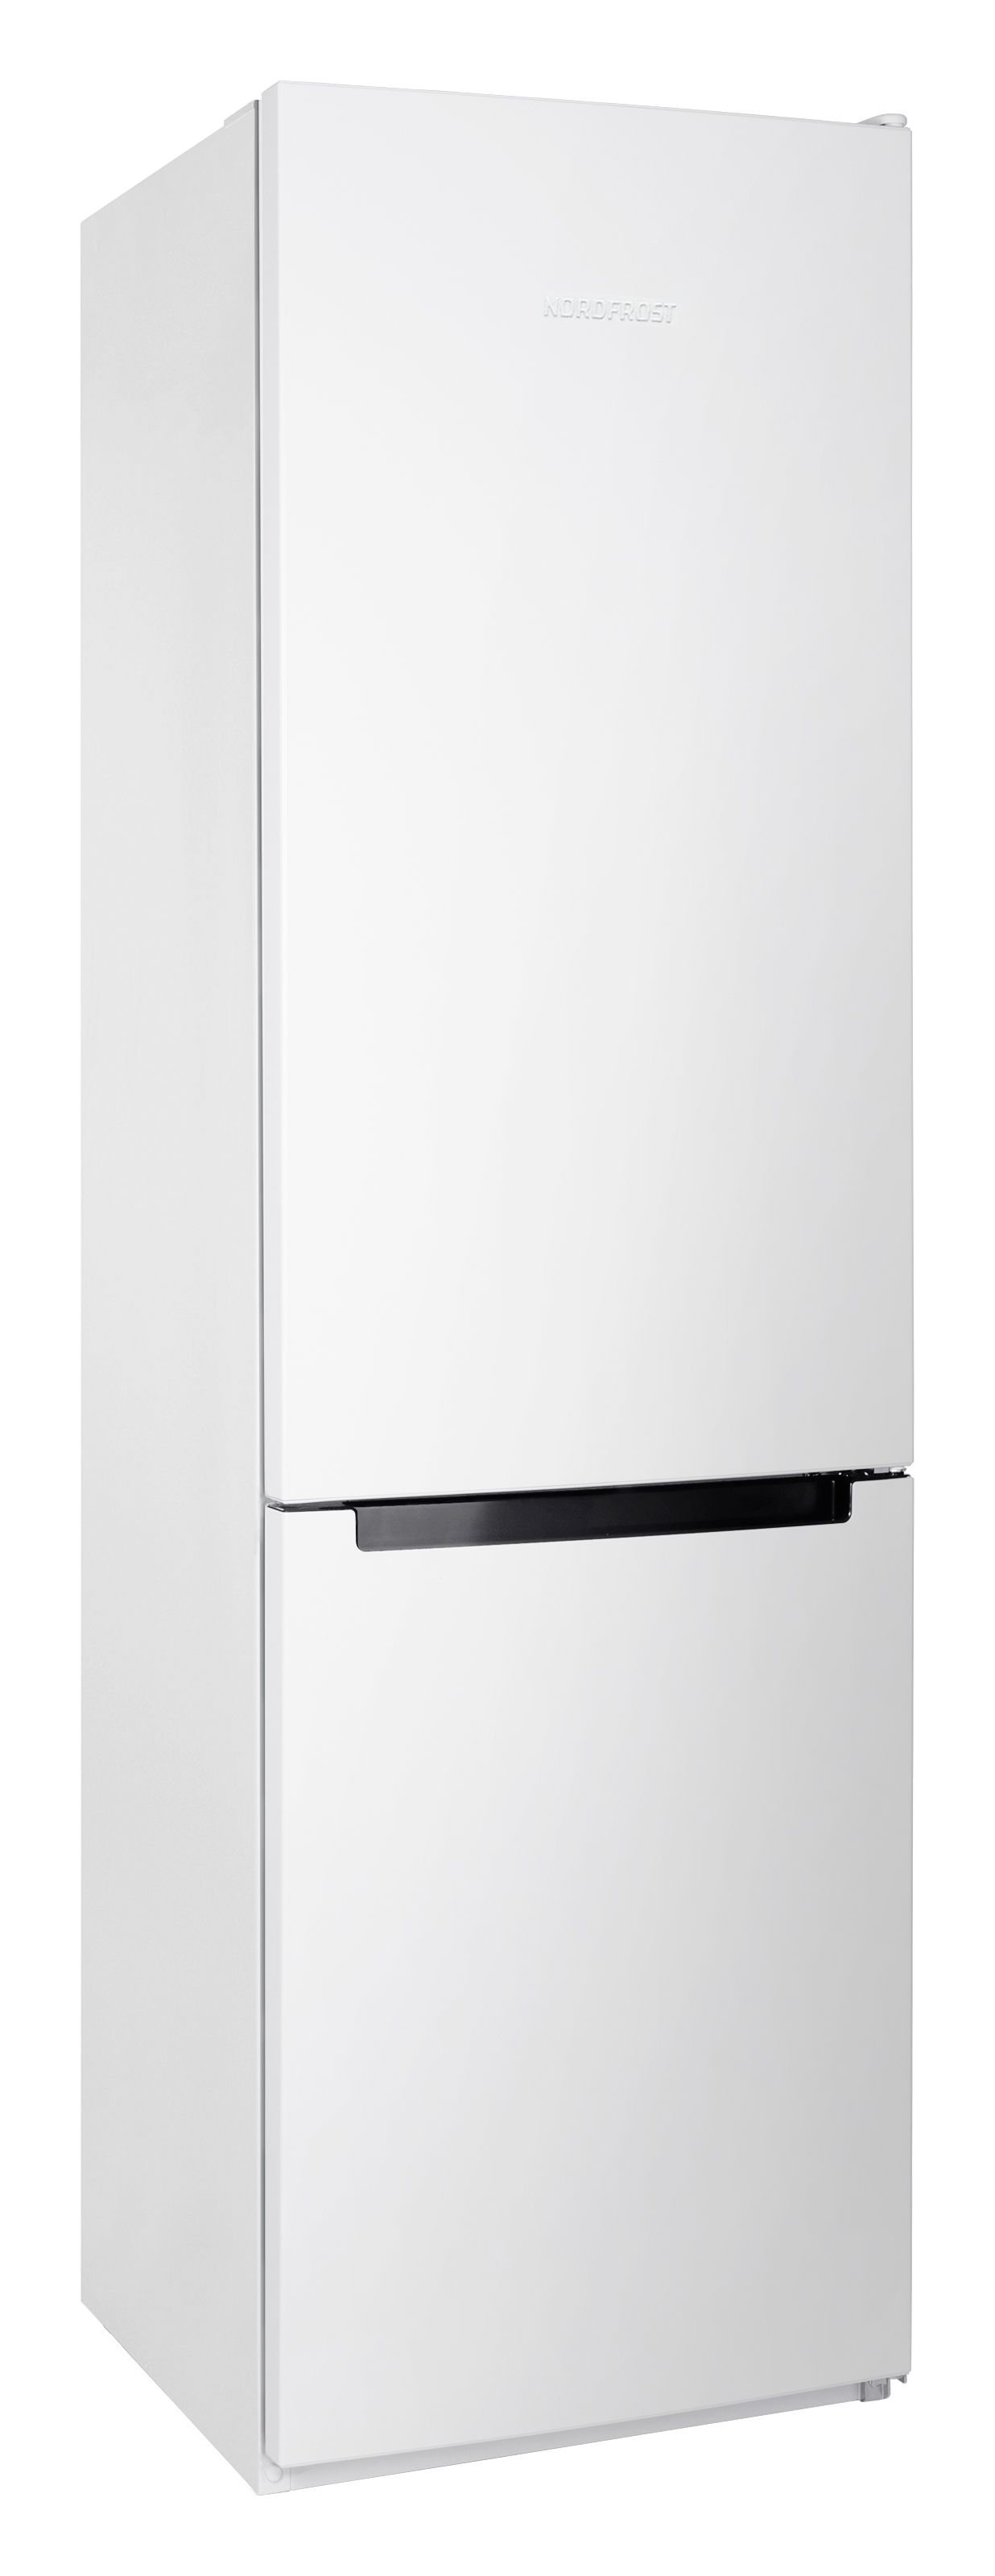 Холодильник NordFrost NRB 154 W белый двухкамерный холодильник nordfrost nrb 154 r